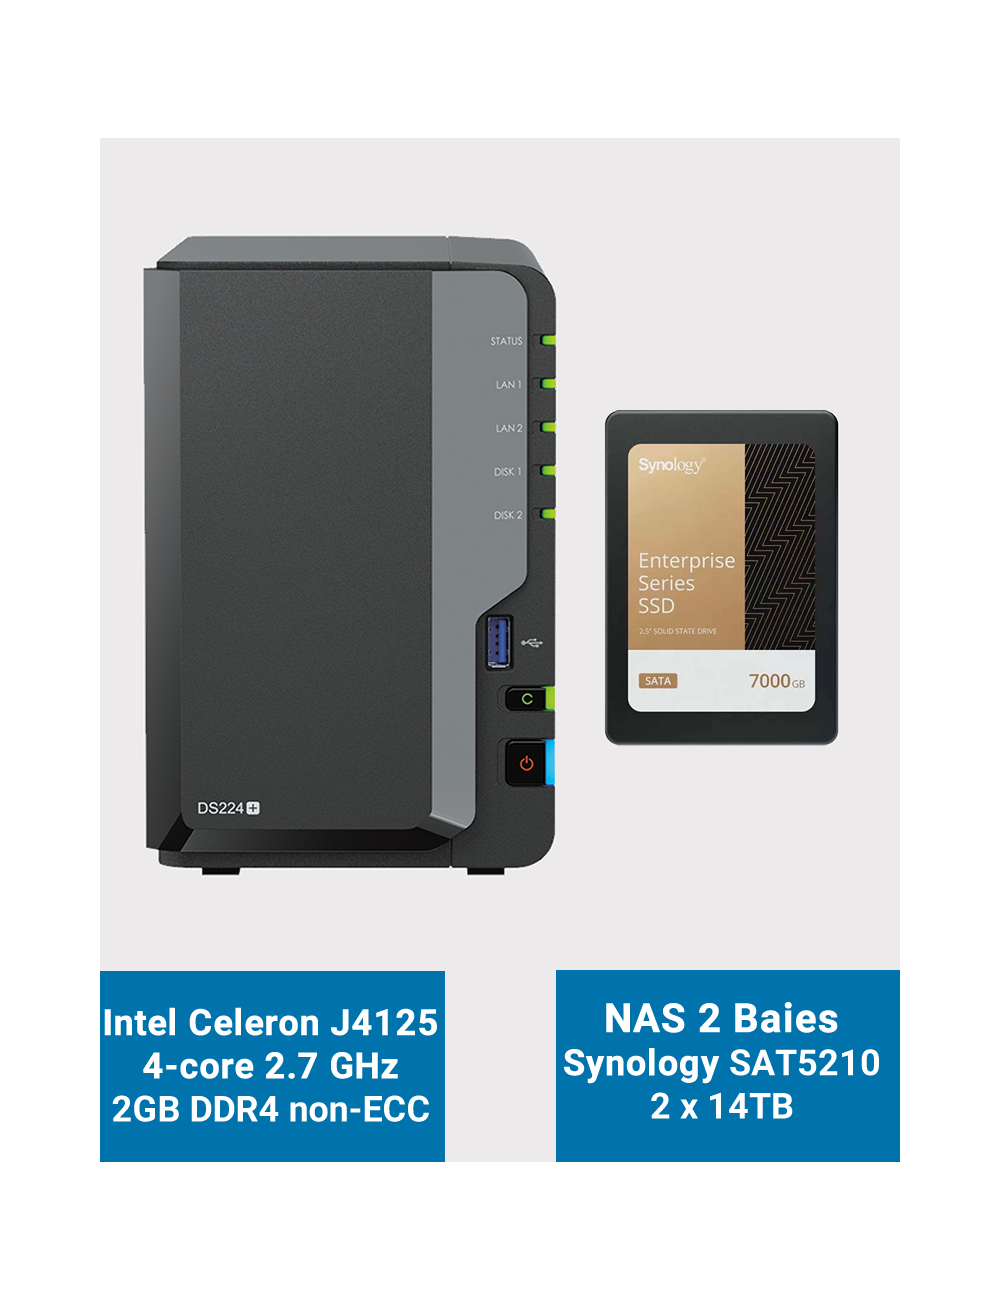 Synology DiskStation DS224+ 2GB Servidor NAS SAT5210 14TB (2x7TB)